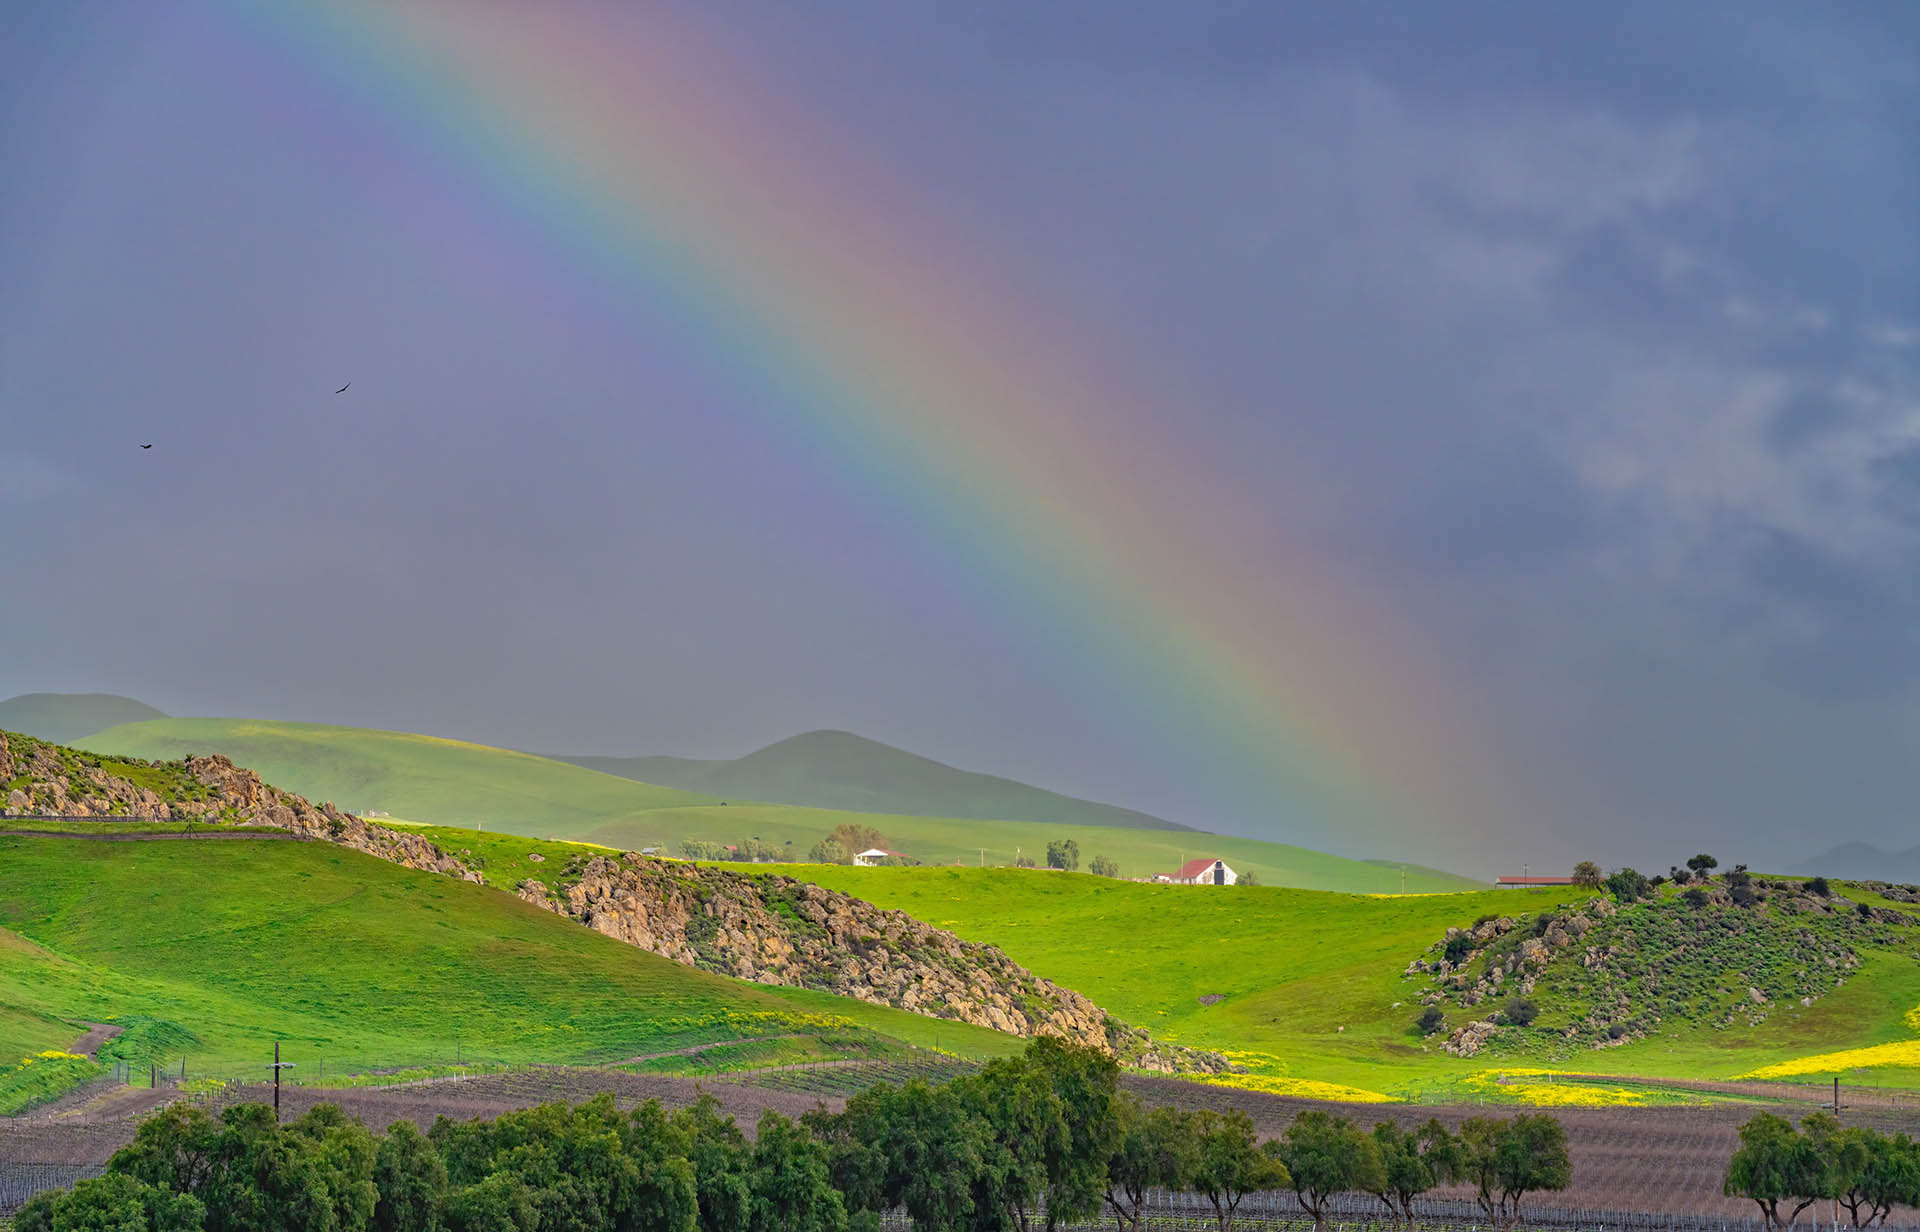 Hollister landscape - rainbow over hills